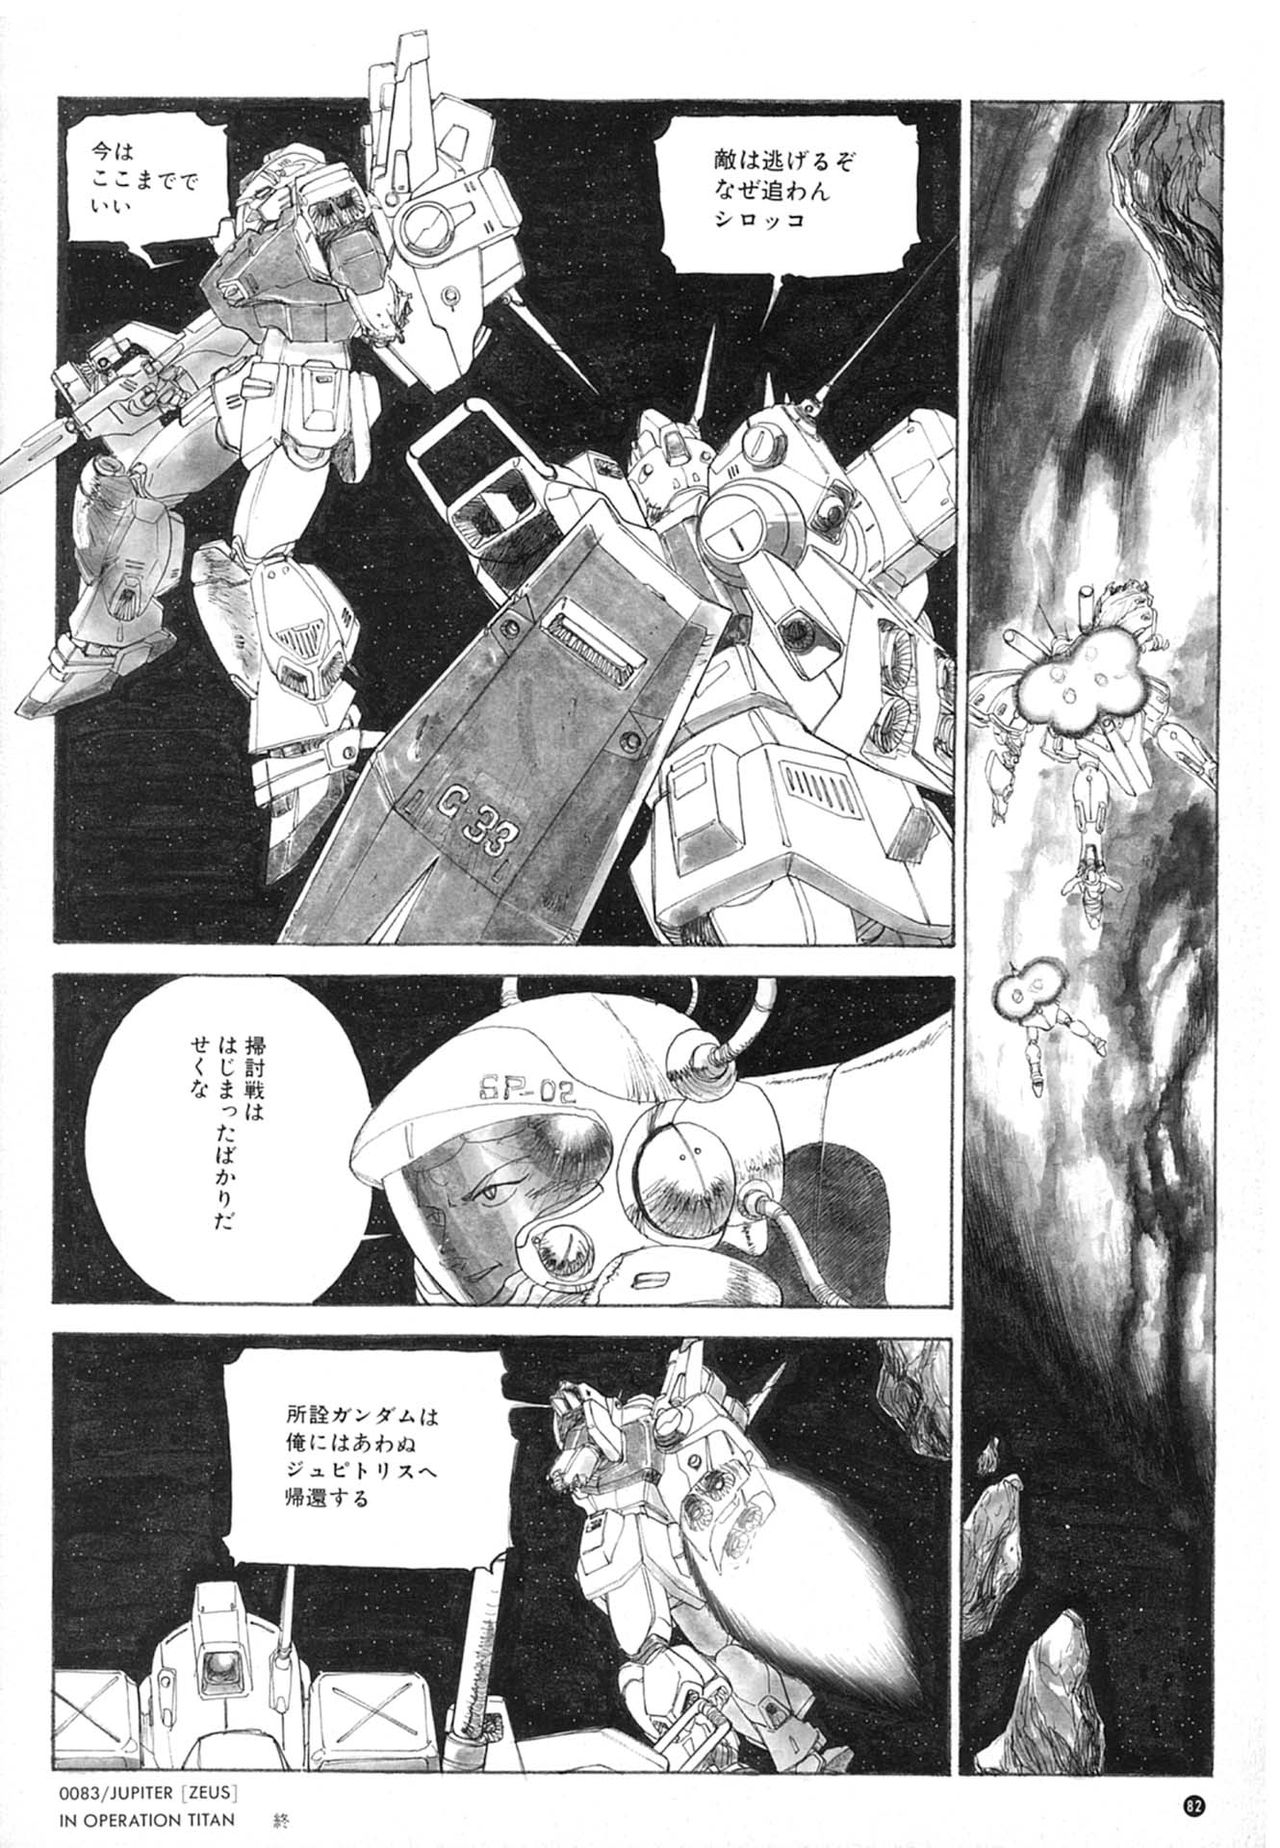 [Kazuhisa Kondo] Kazuhisa Kondo 2D & 3D Works - Go Ahead - From Mobile Suit Gundam to Original Mechanism 81